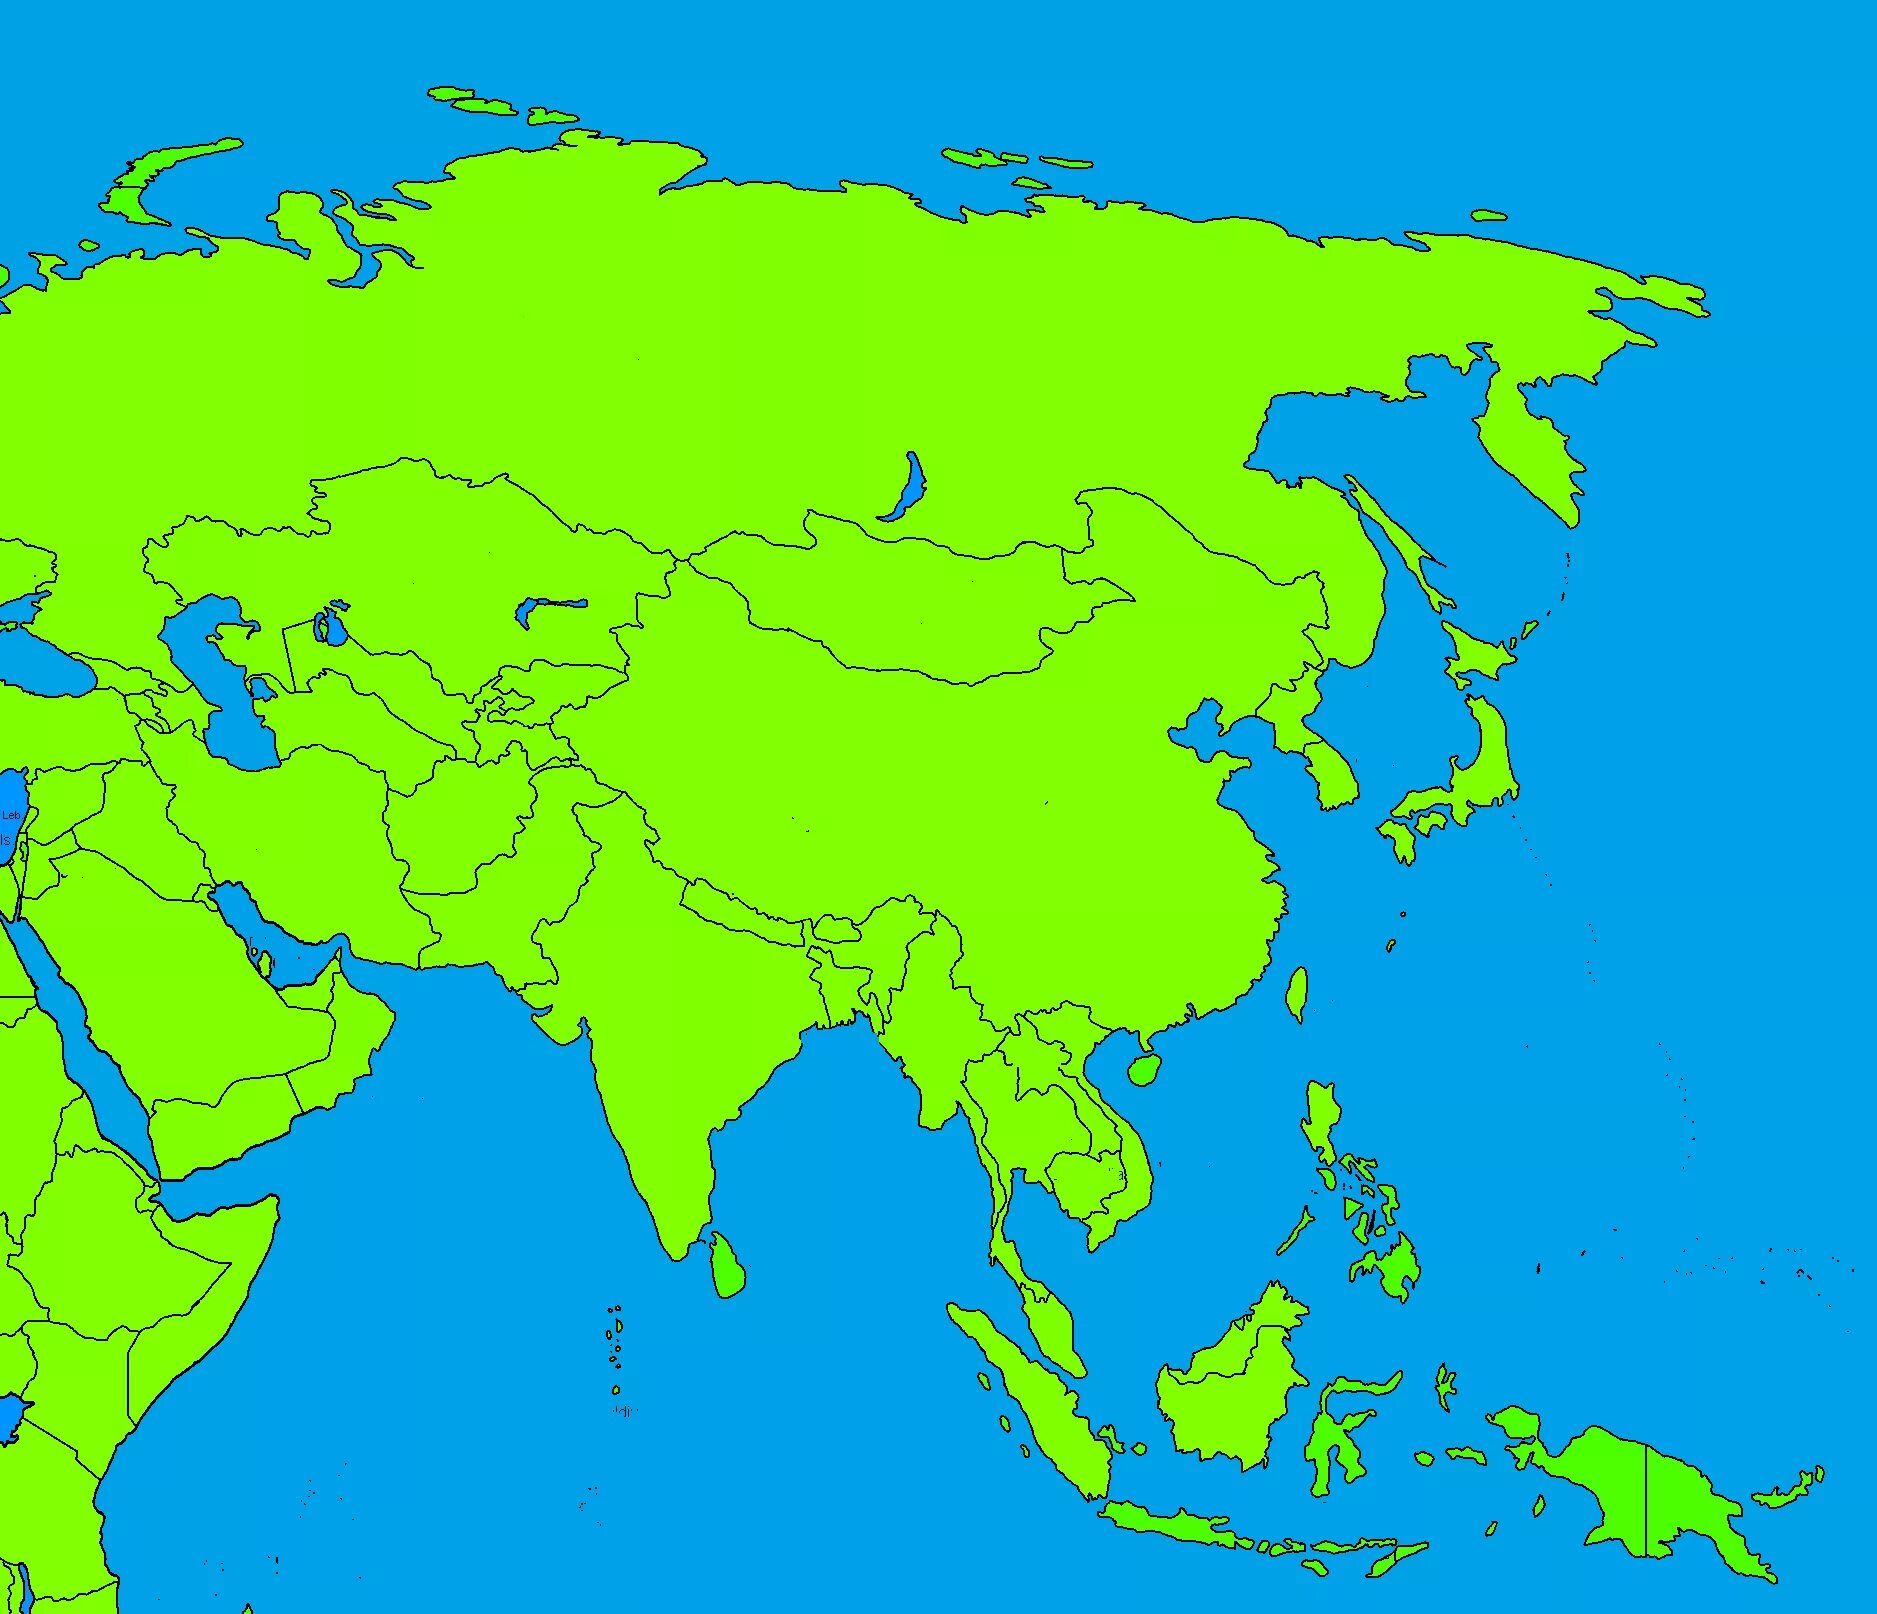 Maps for mapping. Карта Азии для маппинга. Карта Азии без названий стран. Евразия без названий. Карта Азии для мапперов.